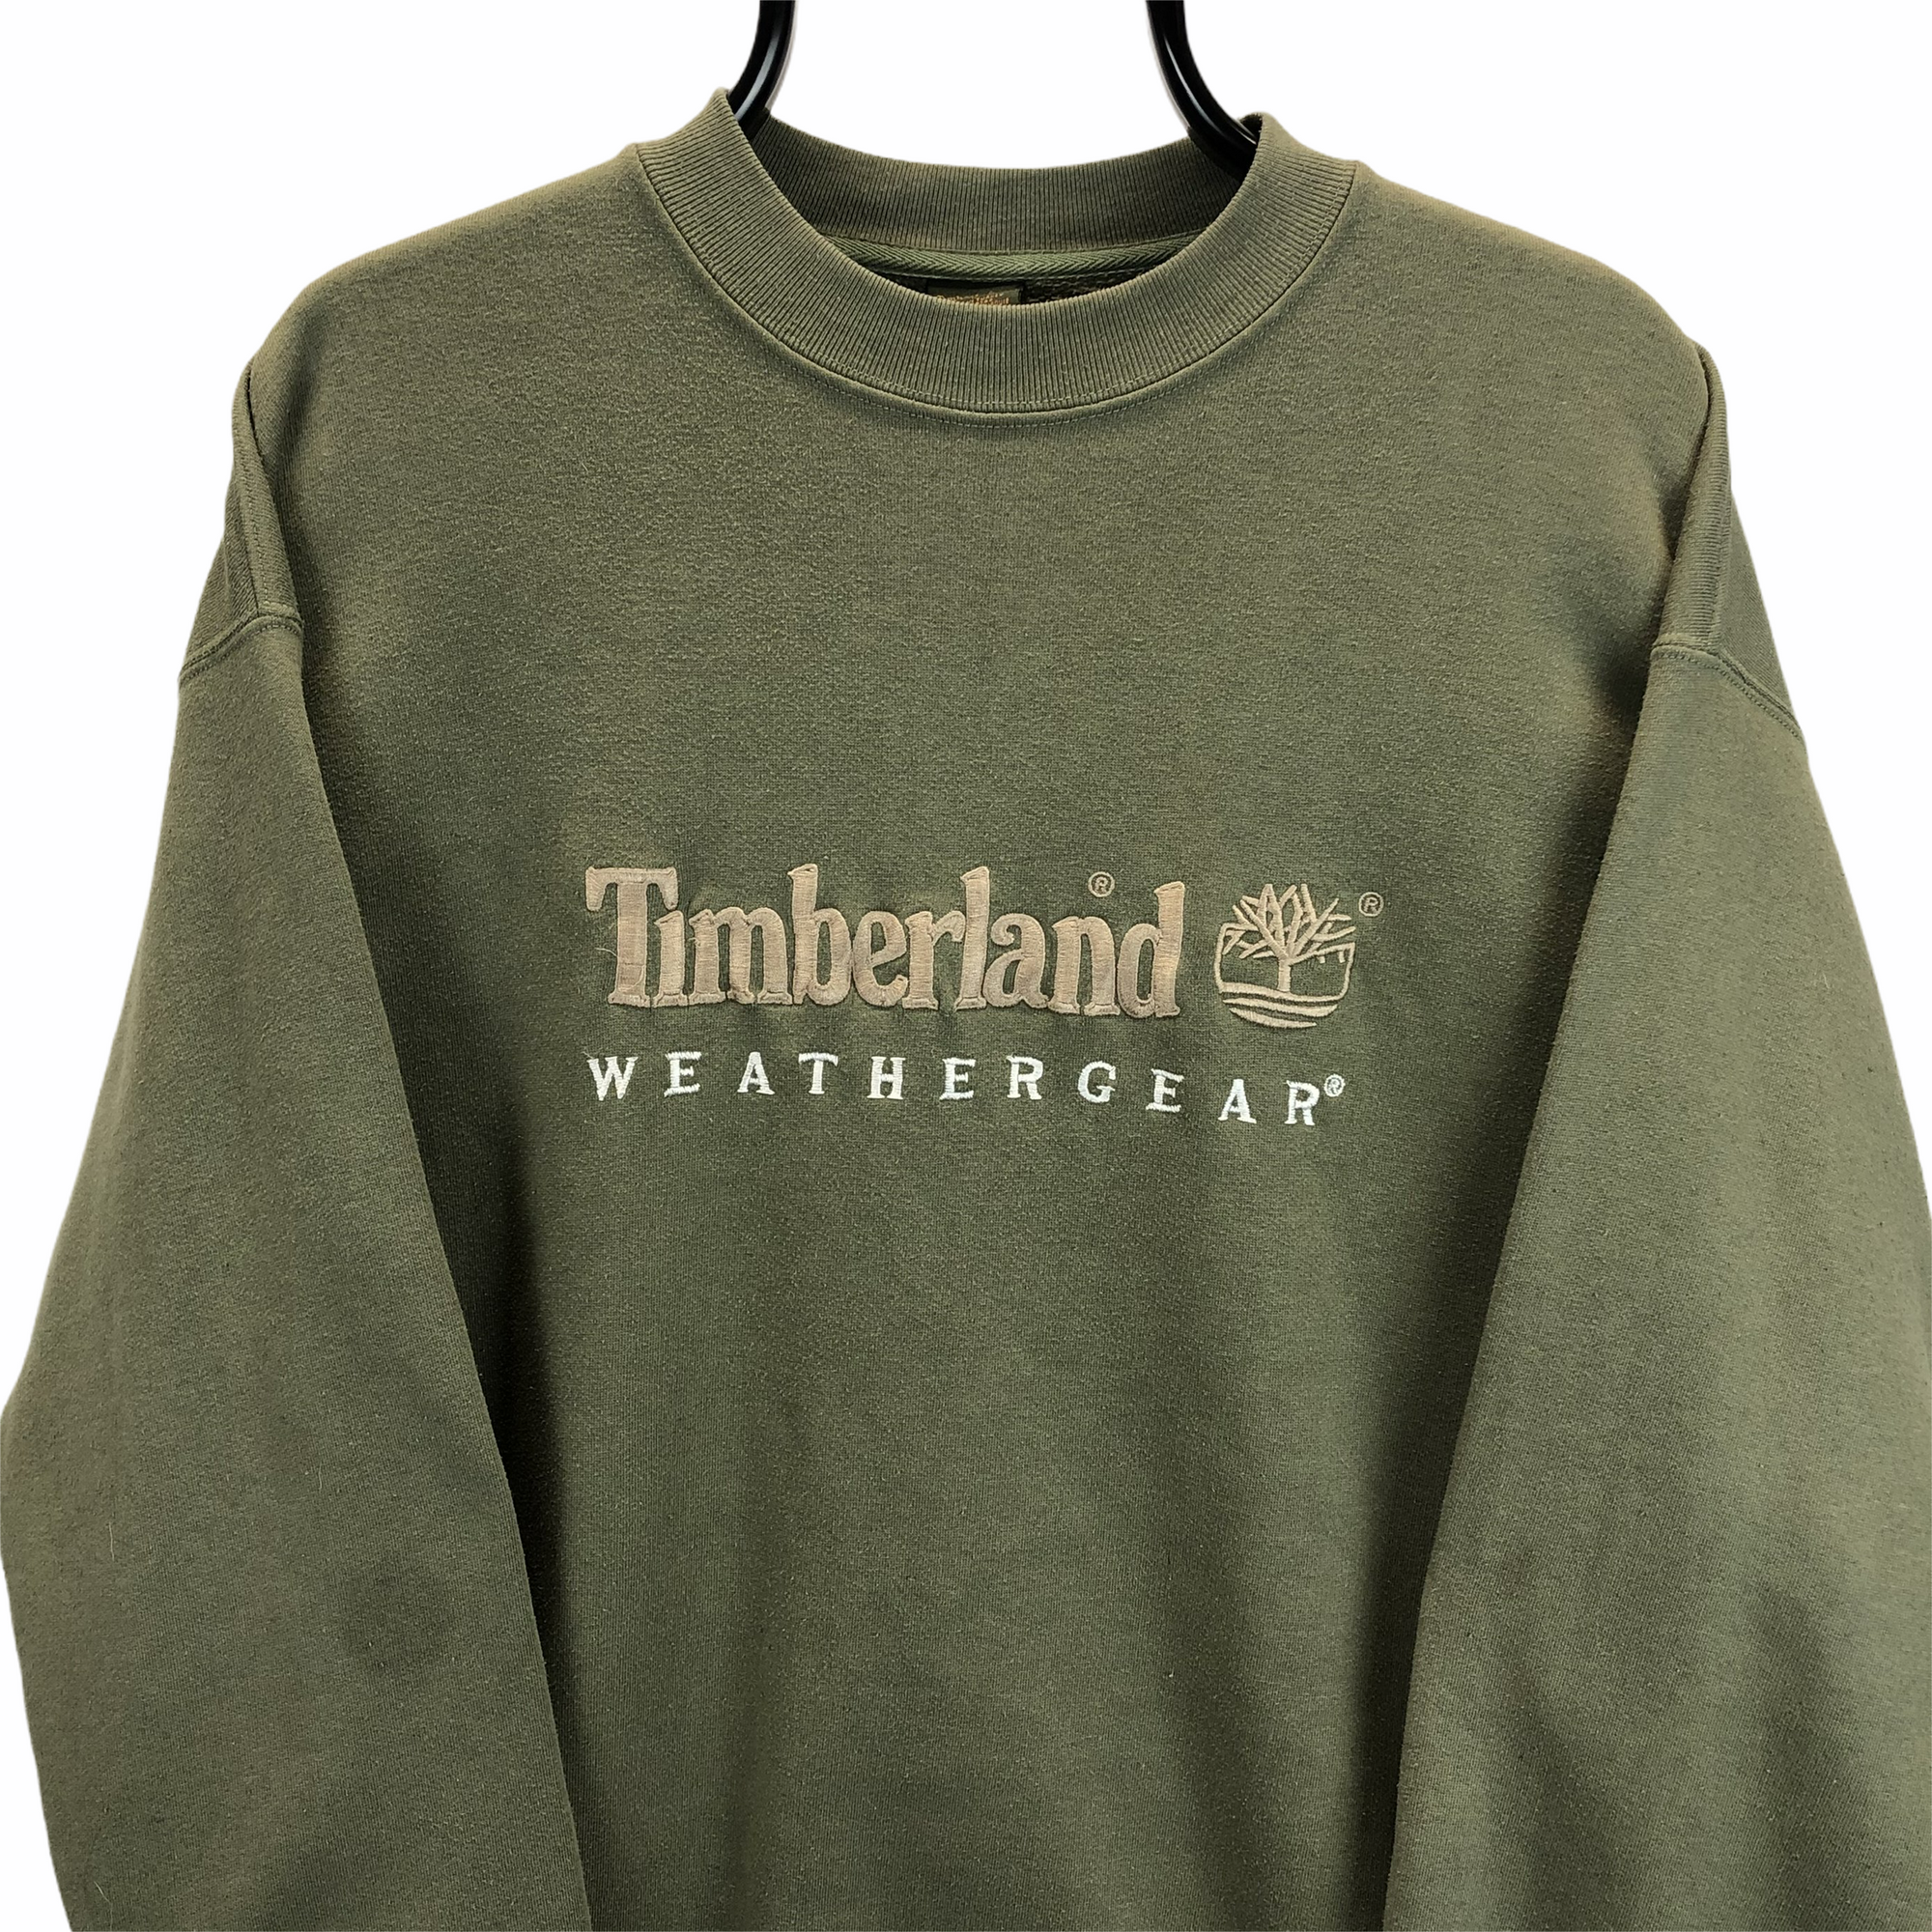 Vintage 90s Timberland Spellout Sweatshirt in Olive Green - Men's Medium/Women's Large